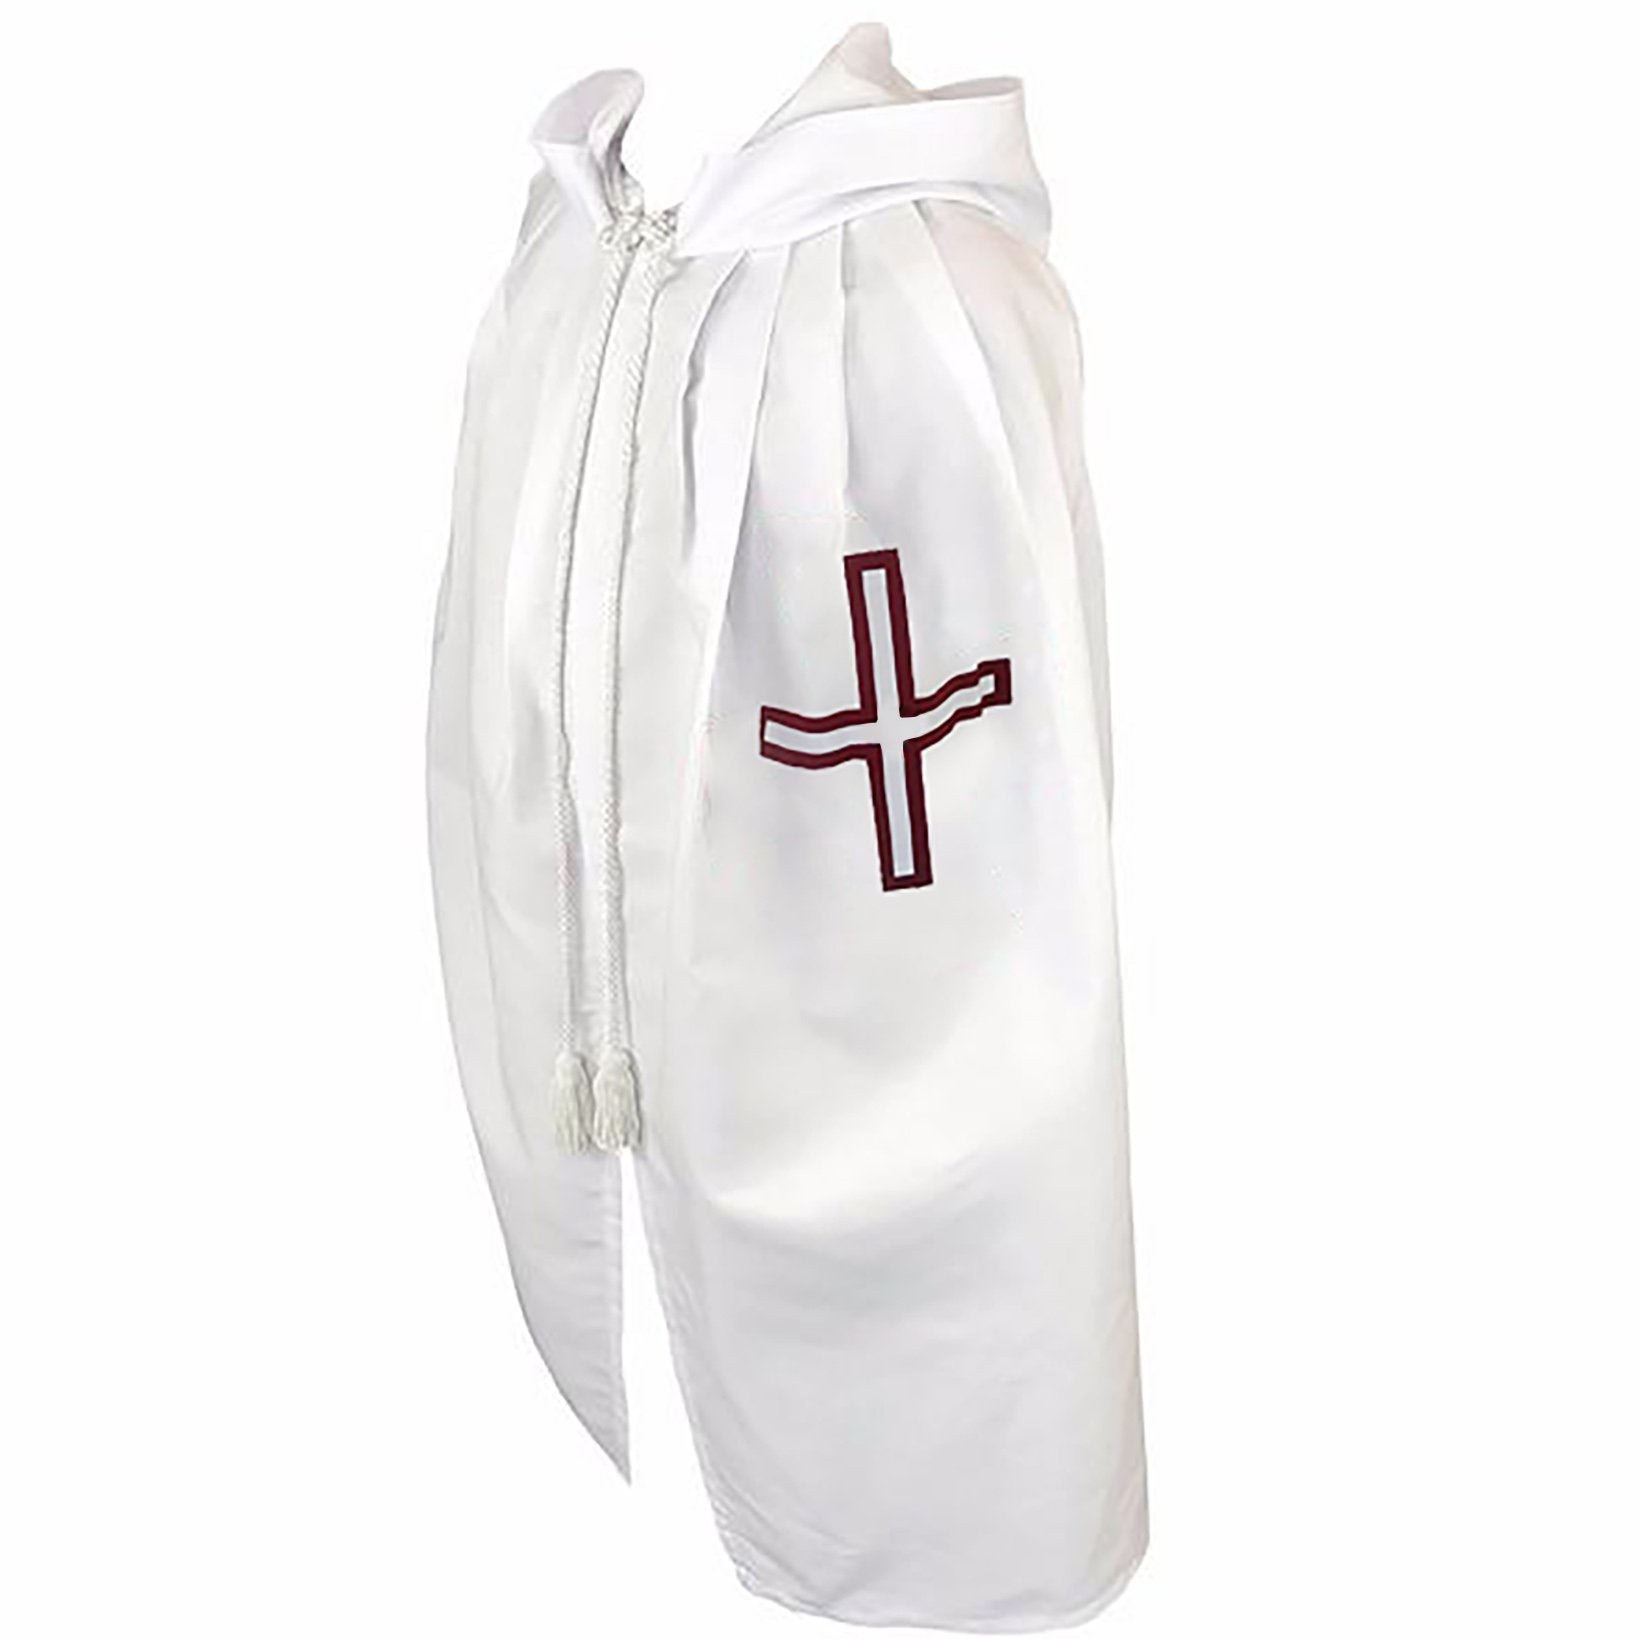 St. Thomas of Acon Cloak Mantle with Red Cross - Bricks Masons